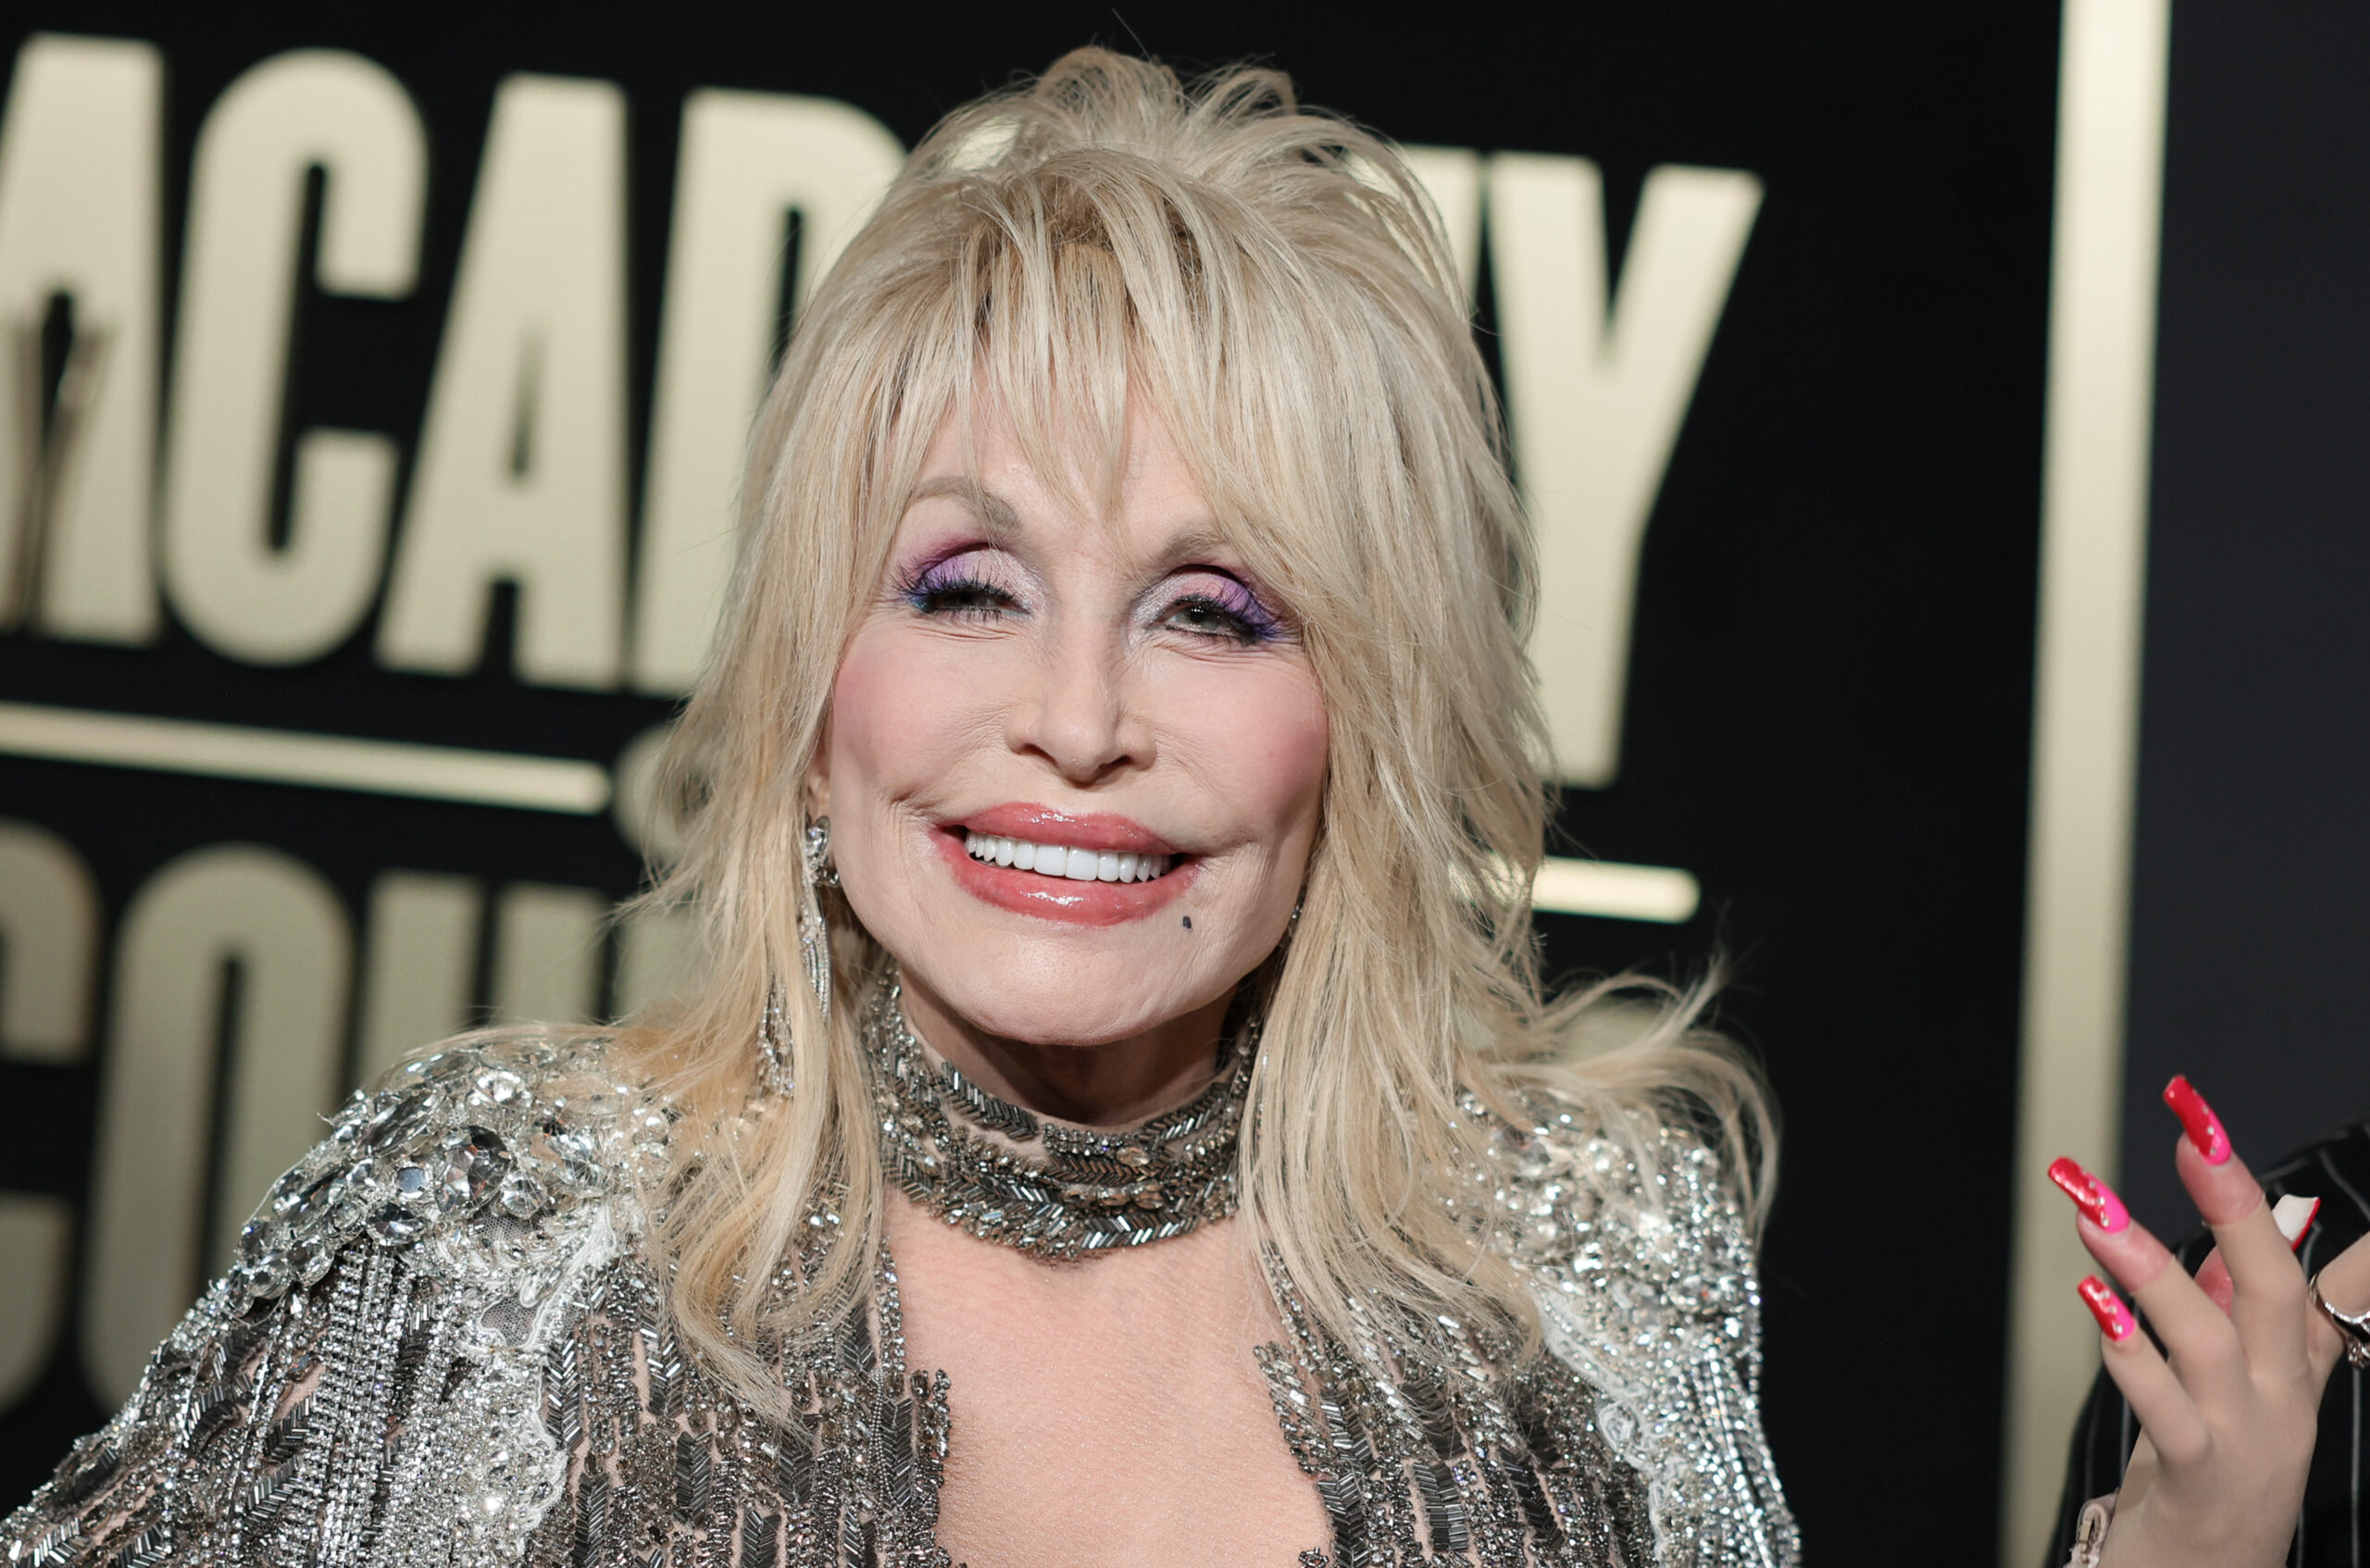 Dolly Parton, 77, reaches career milestone with new album